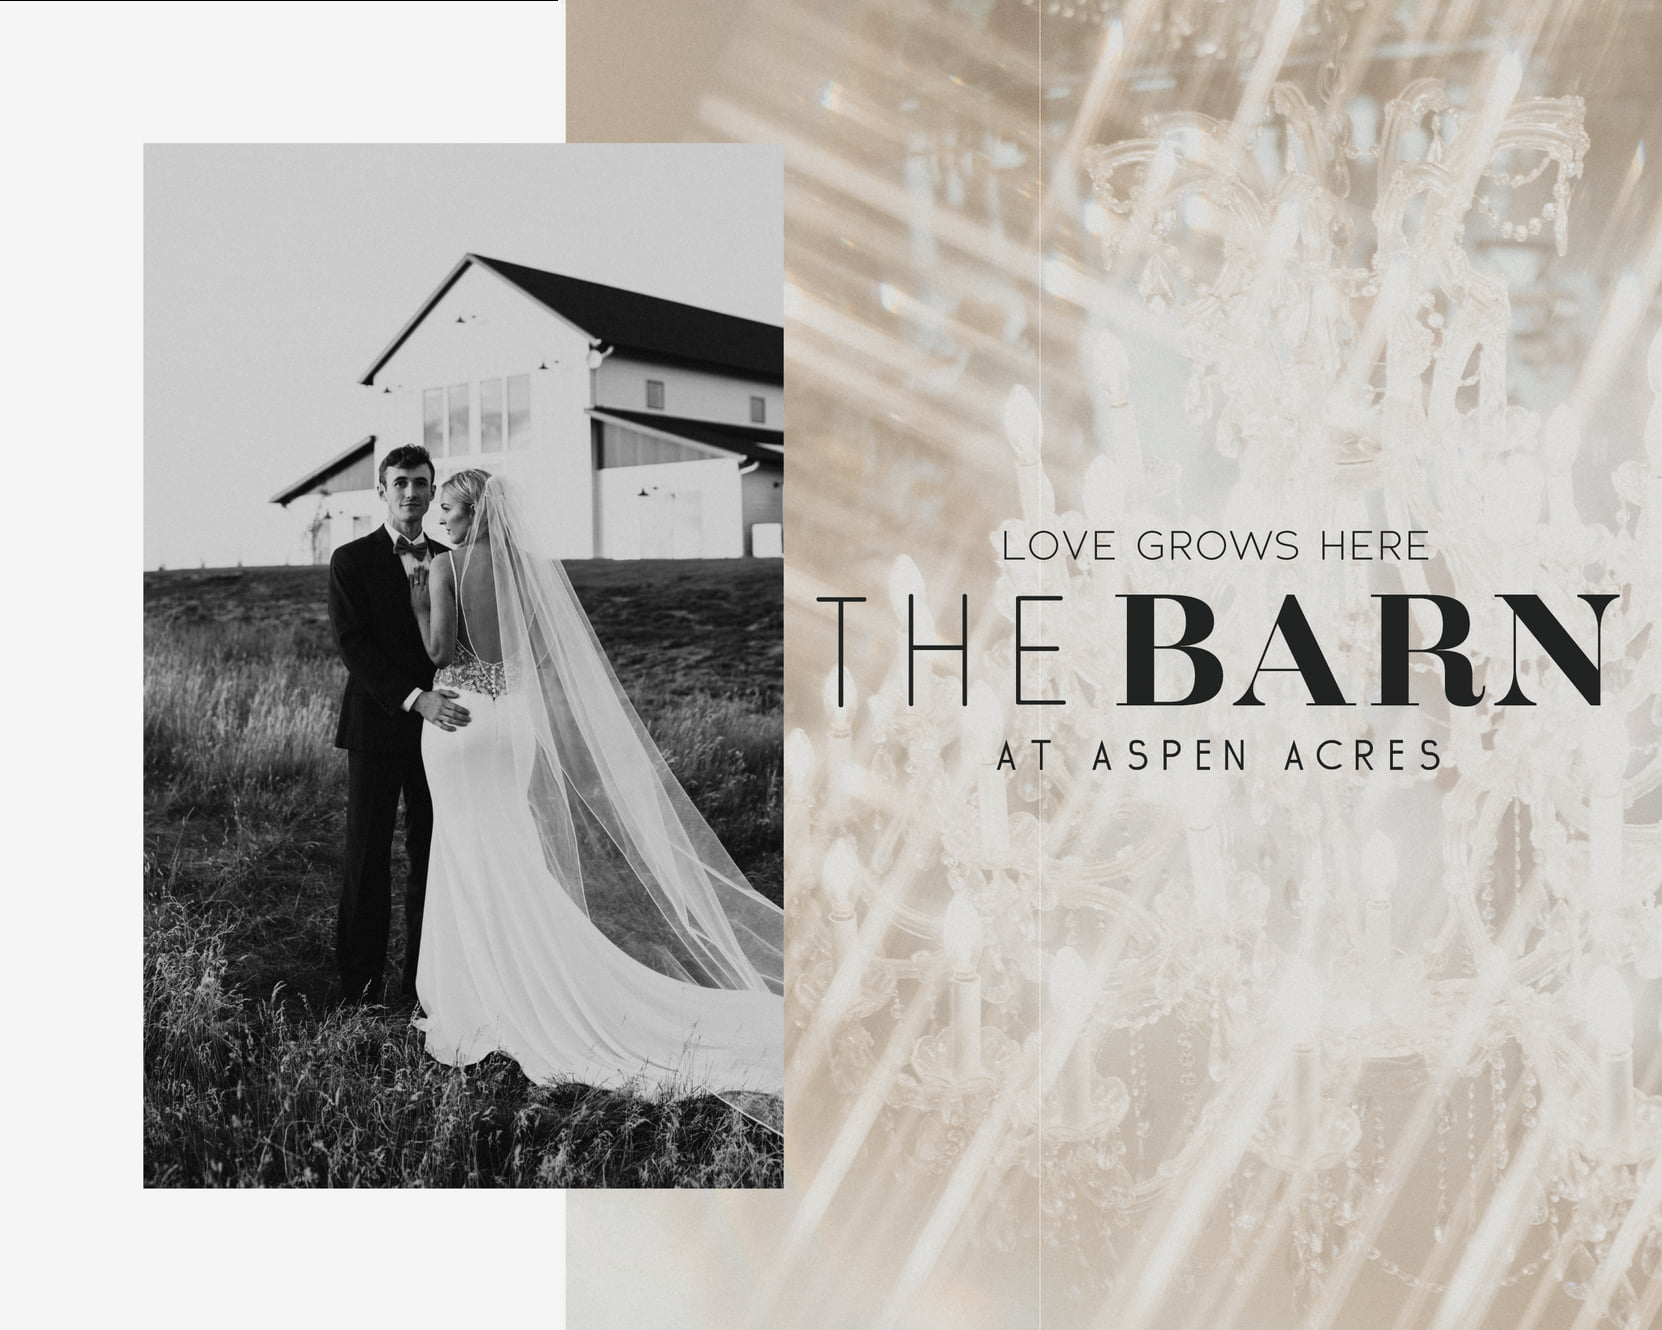 The Barn Aspen Acres outdoor wedding venues in South Dakota